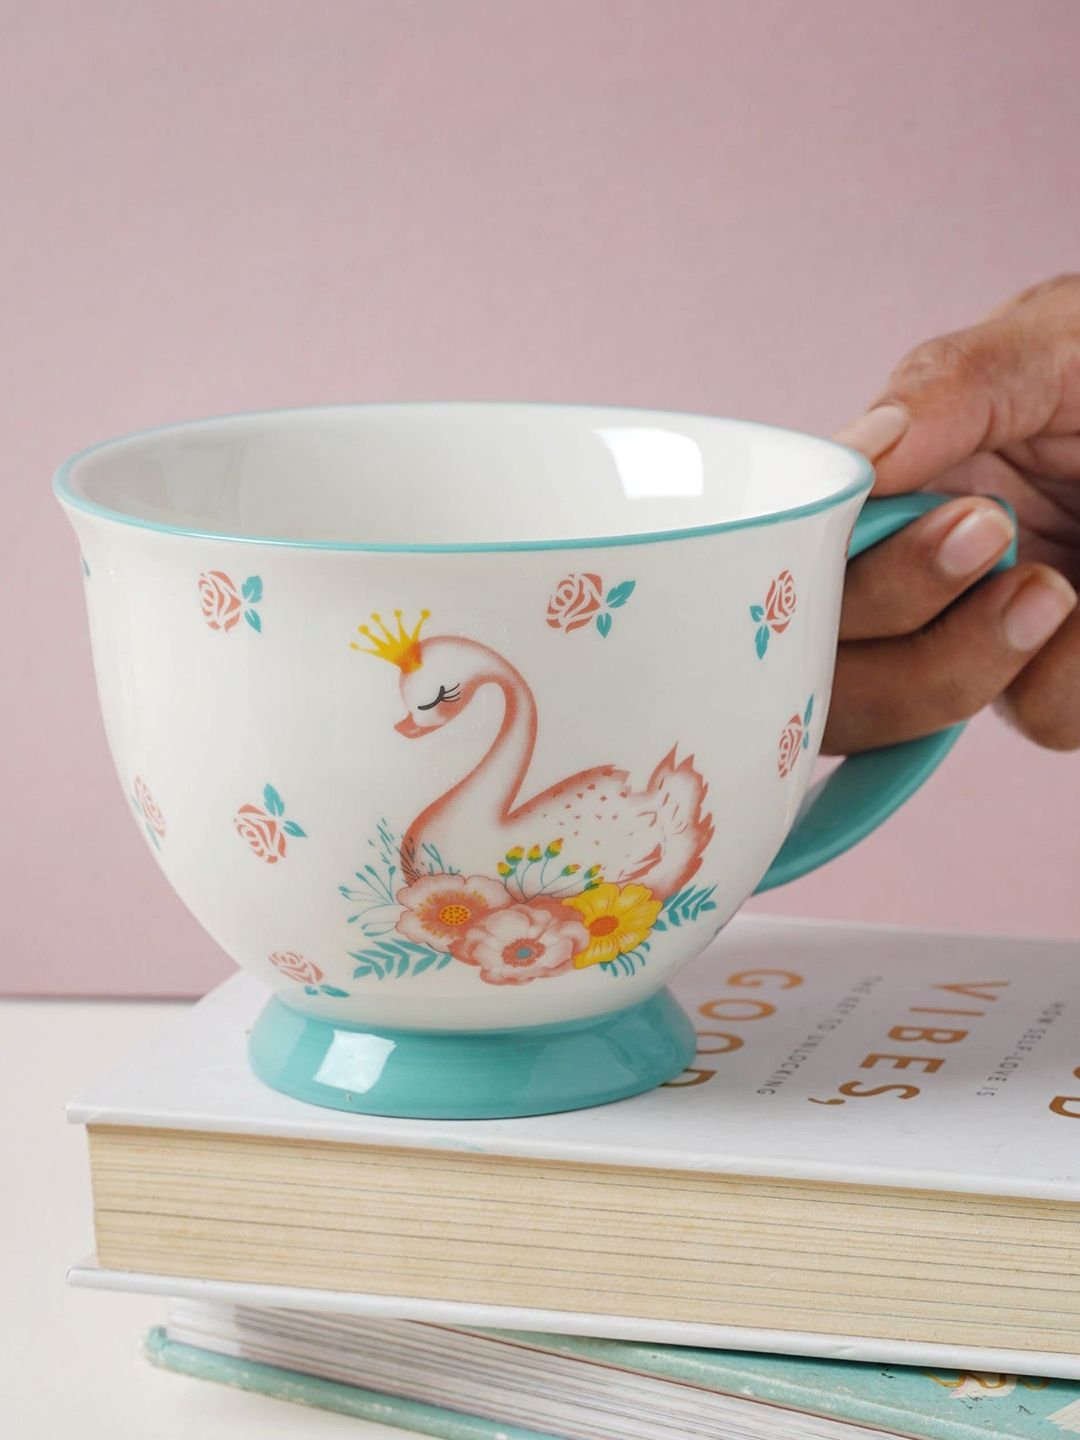 Nestasia White and Blue Swan Printed Ceramic Teacup Price in India